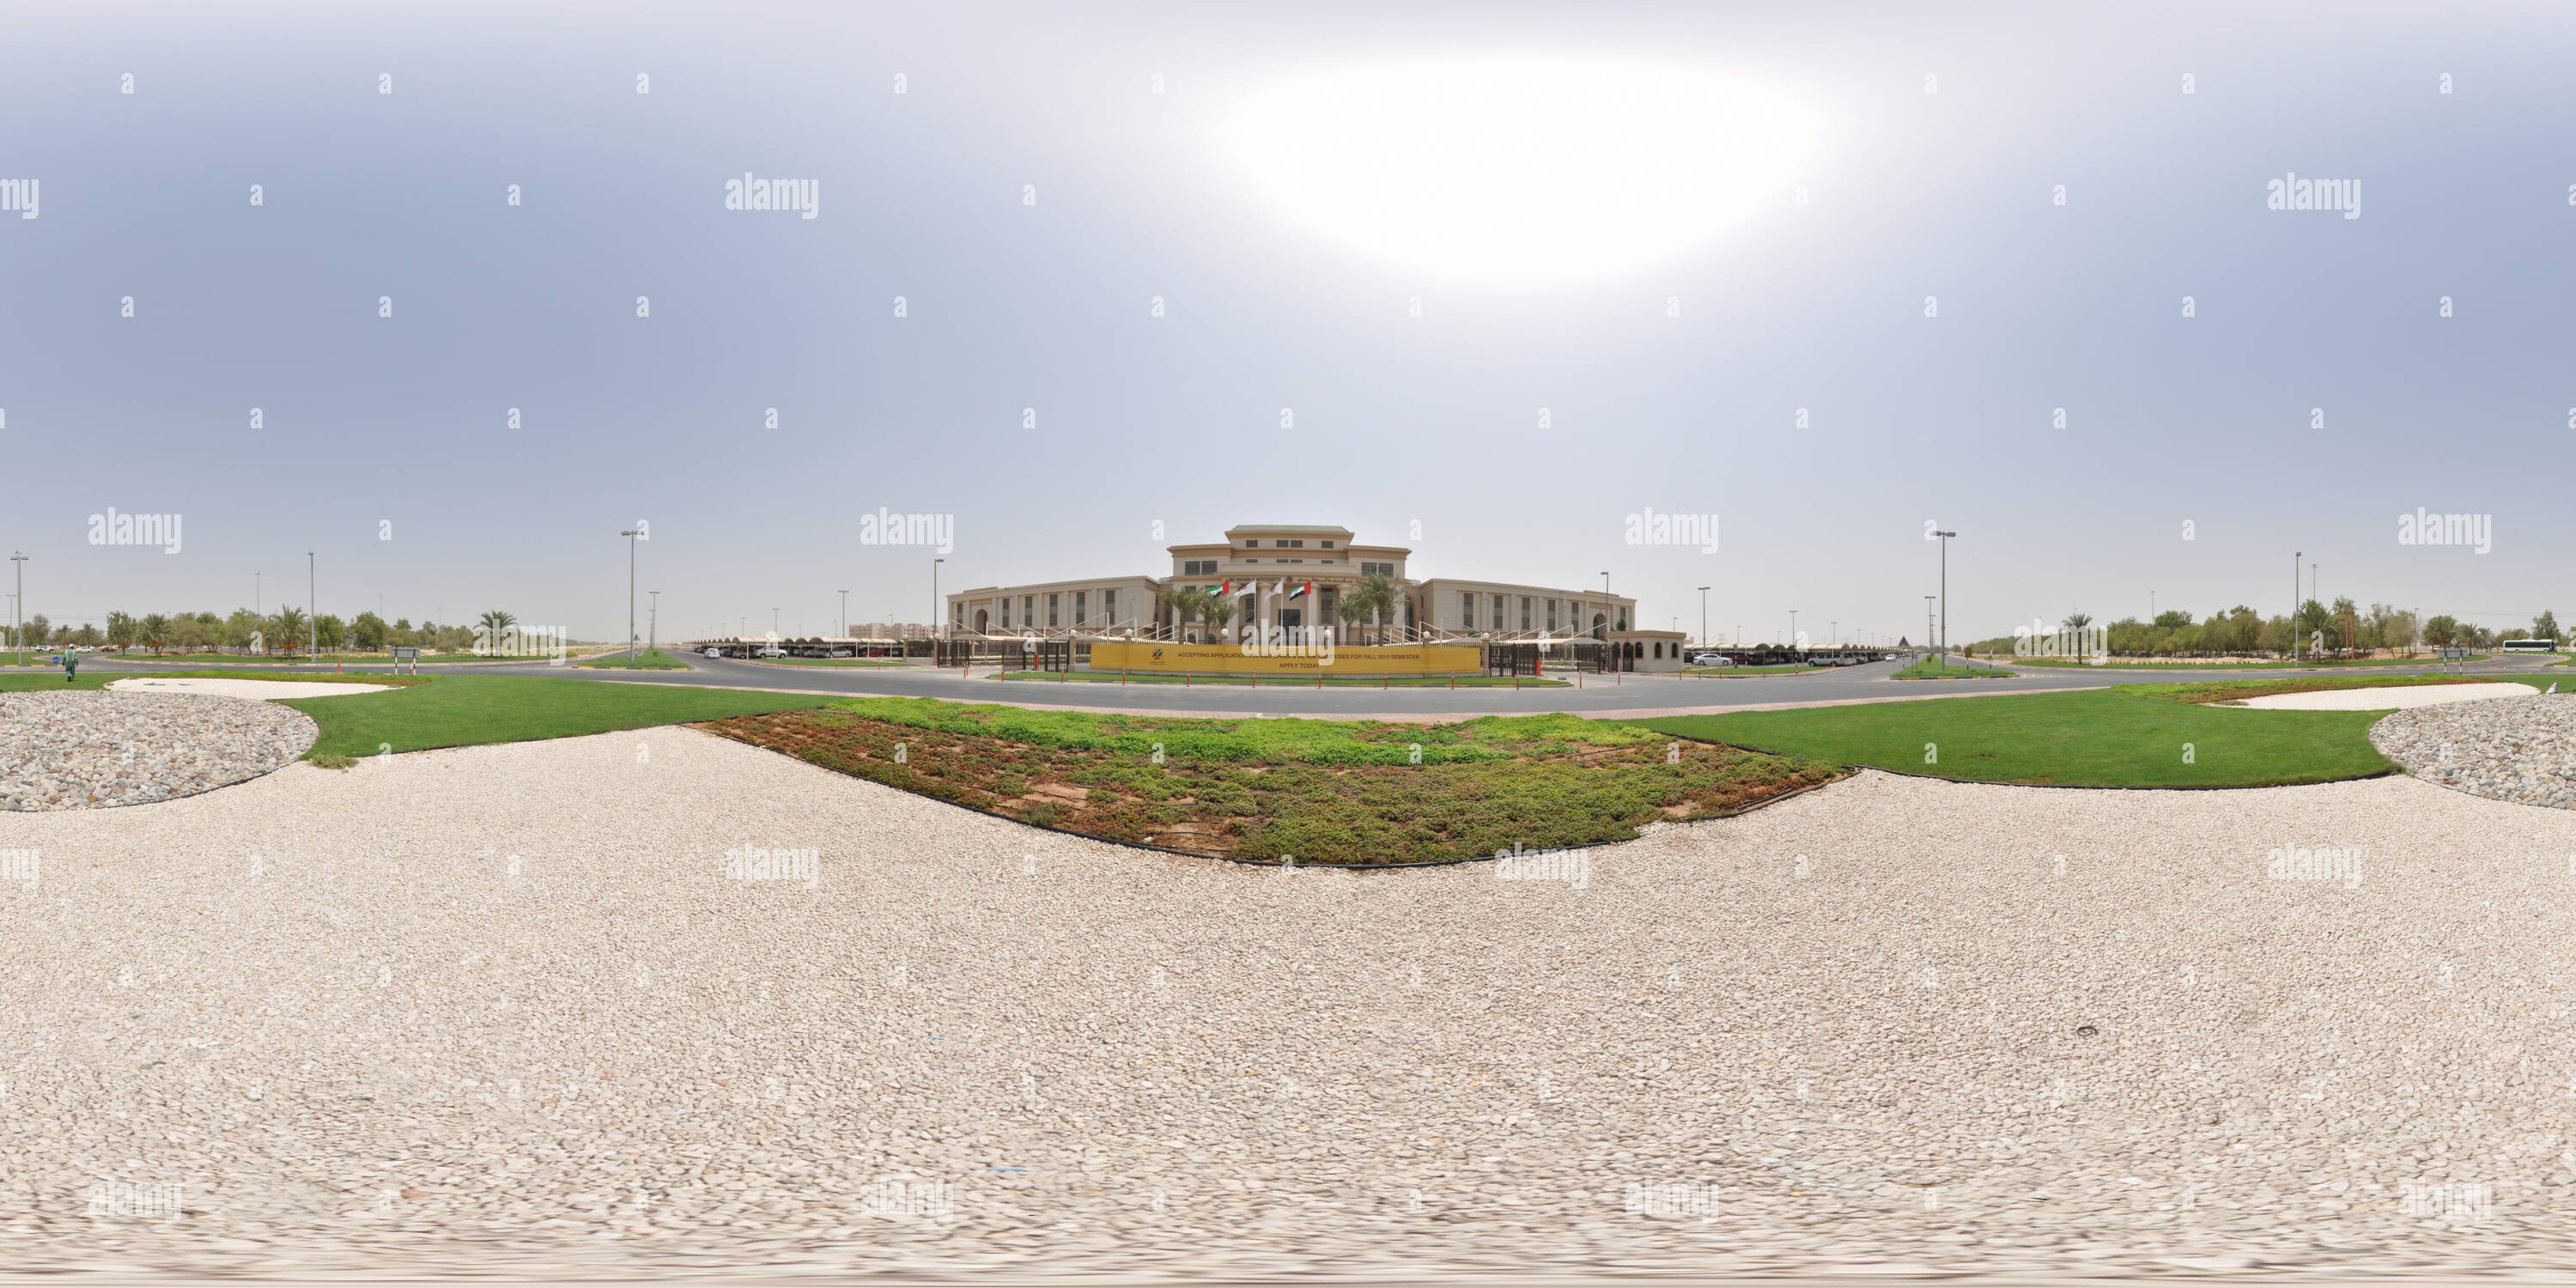 Vista panorámica en 360 grados de Abu Dhabi University ( ADU )